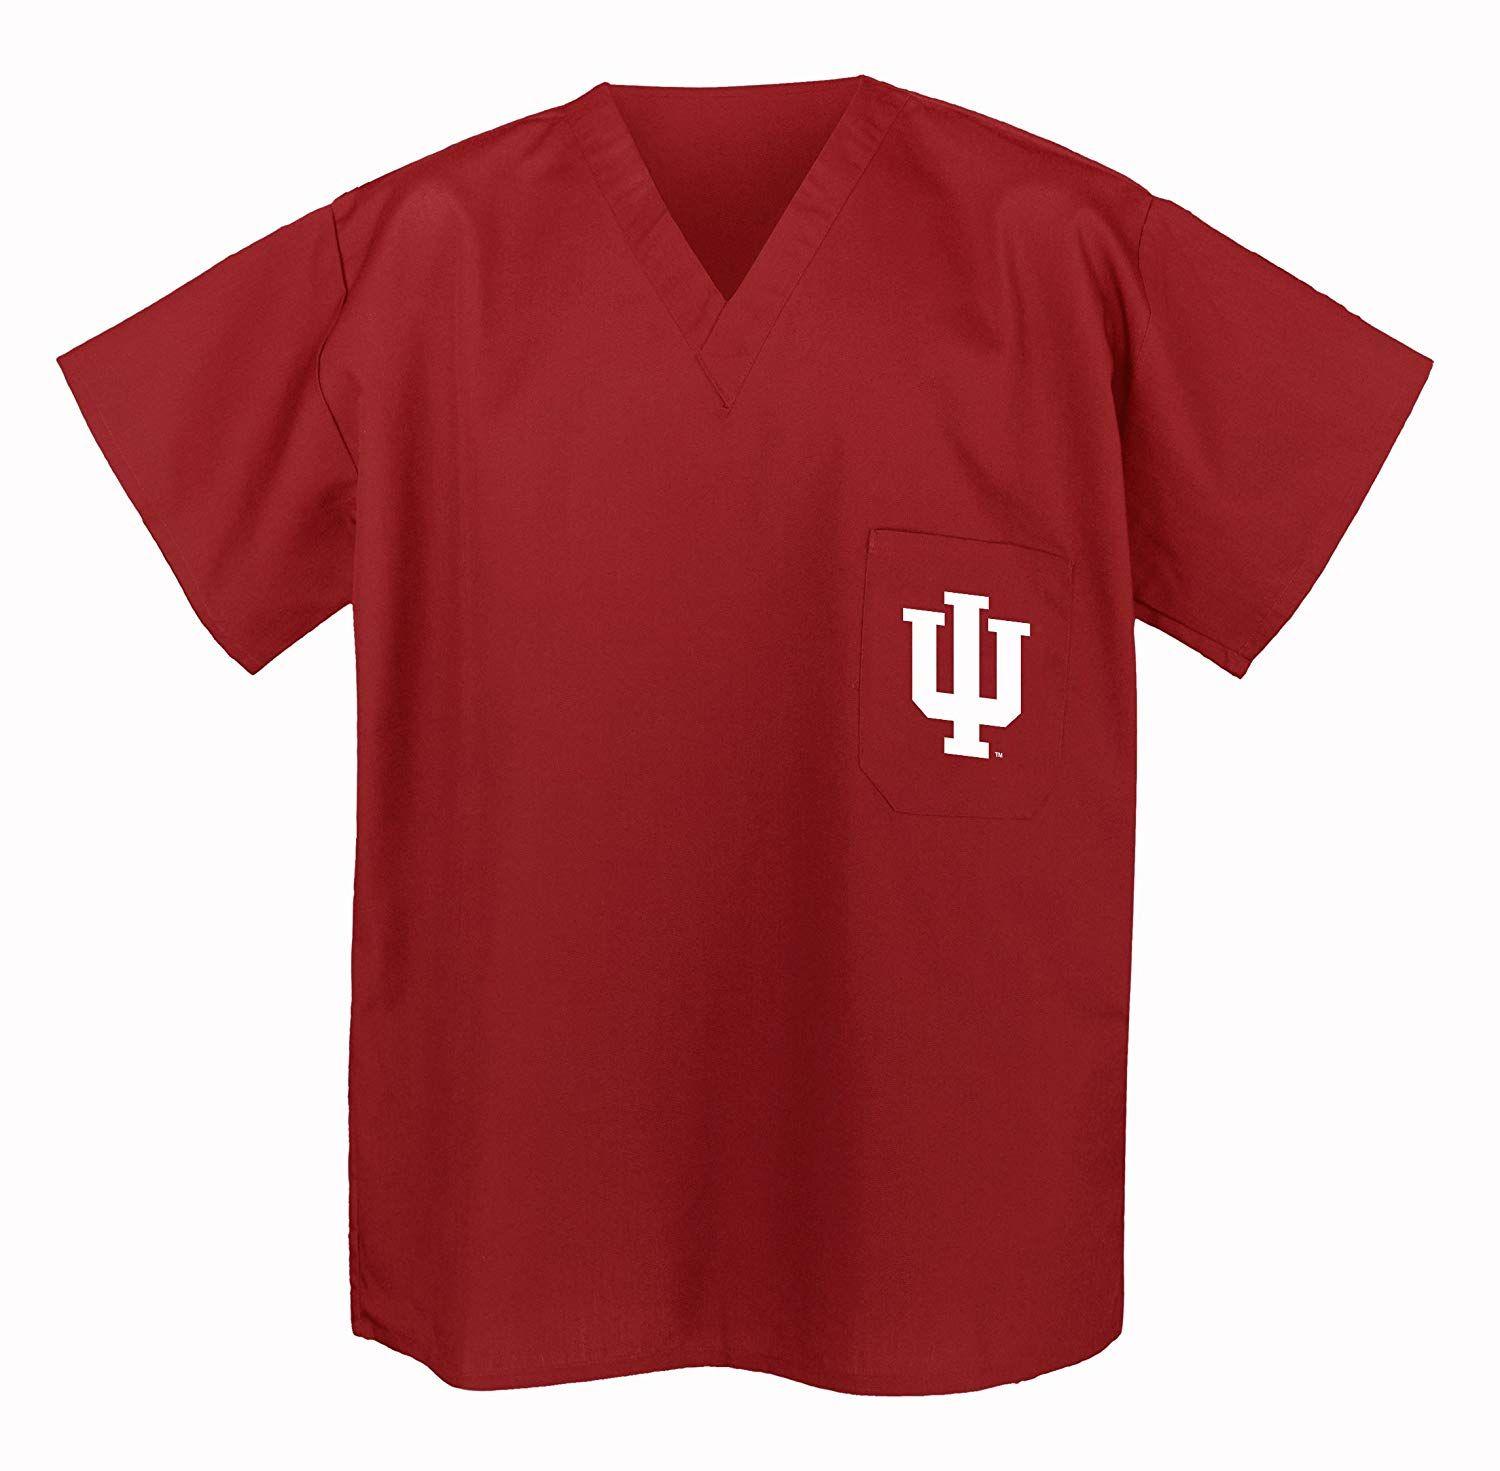 IU University Logo - Amazon.com: Indiana University Shirt - SCRUBS IU Logo Top for MEN or ...